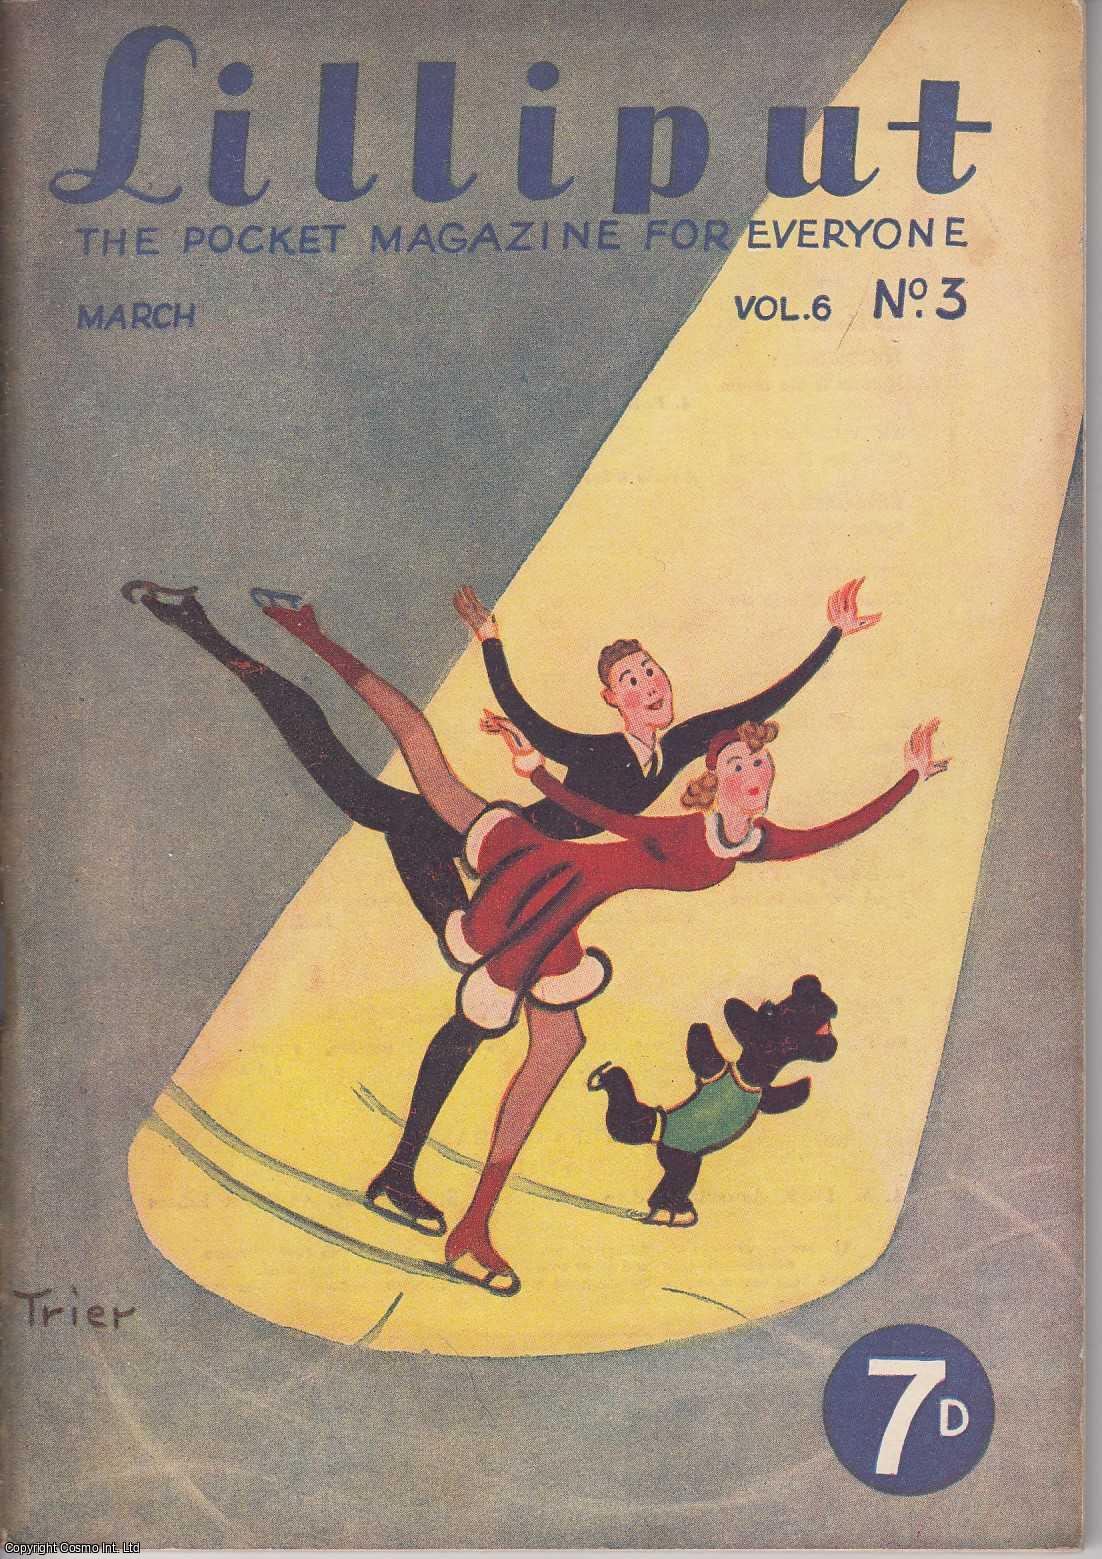 Lilliput - Lilliput Magazine. March 1940. Vol.6 no.3 Issue no.33. A.P. Herbert, Antonia White, William Saroyan, Ritchie Calder, and other pieces.